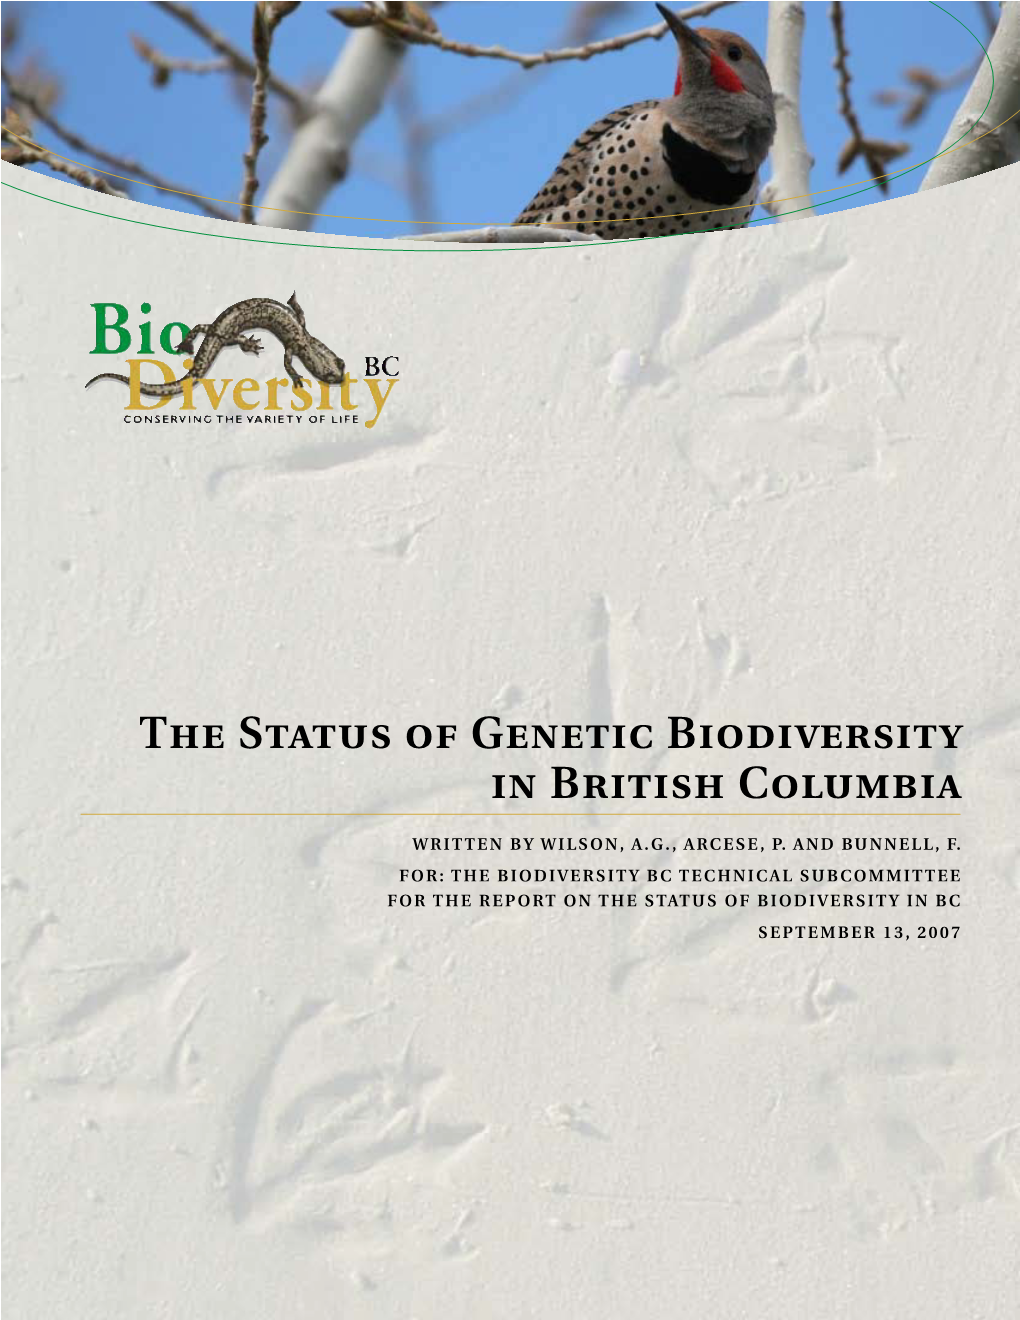 The Status of Genetic Biodiversity in British Columbia